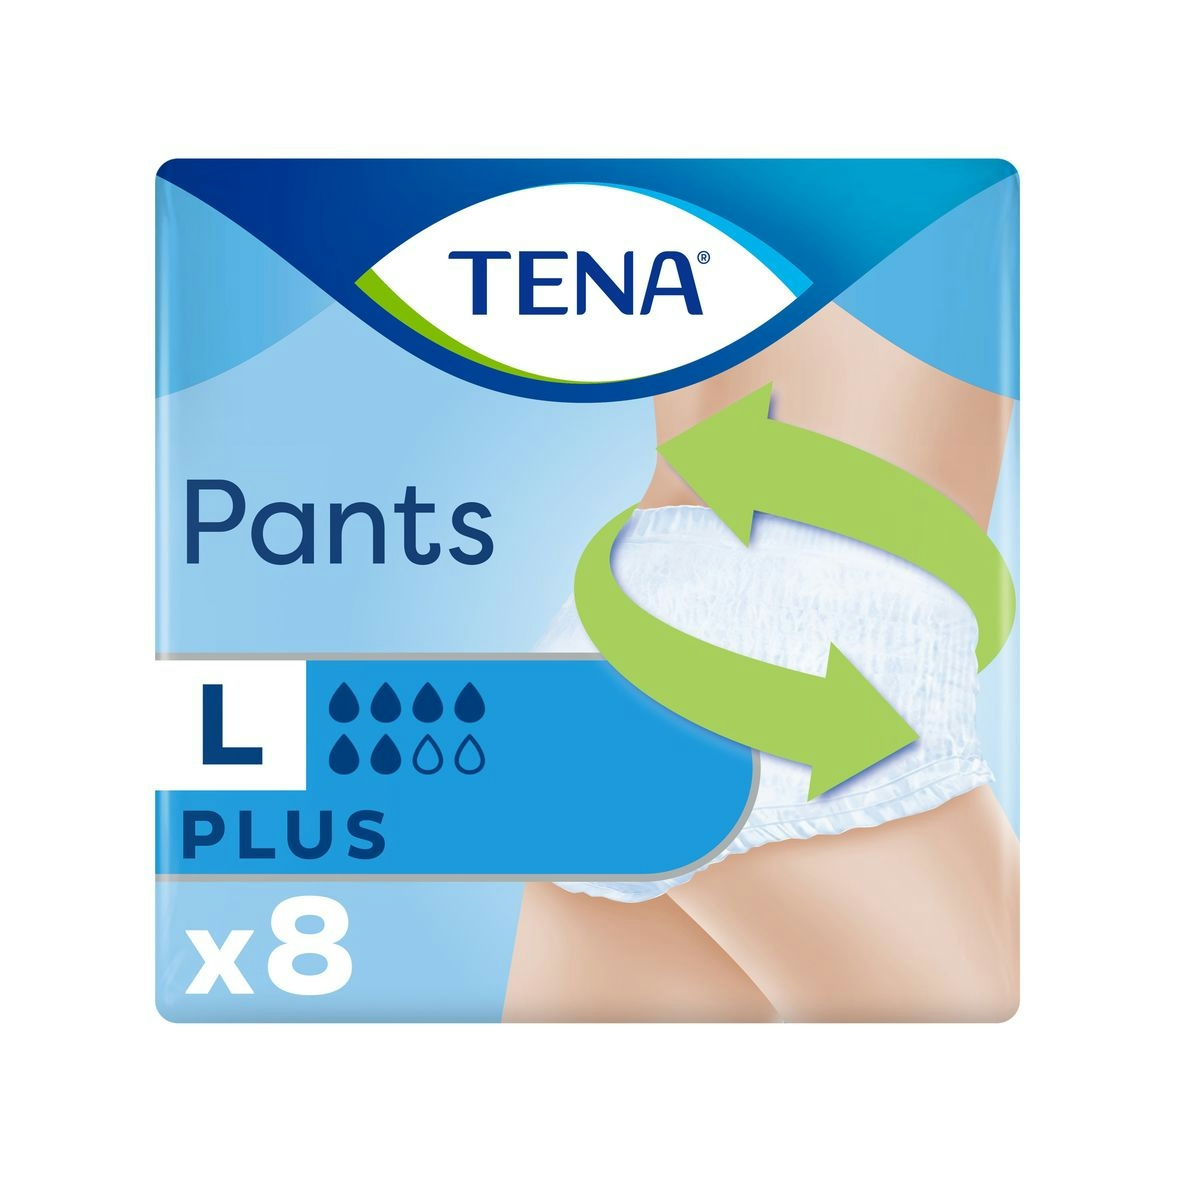 Pantys incontinencia TENA plus talla L paquete 8 uds